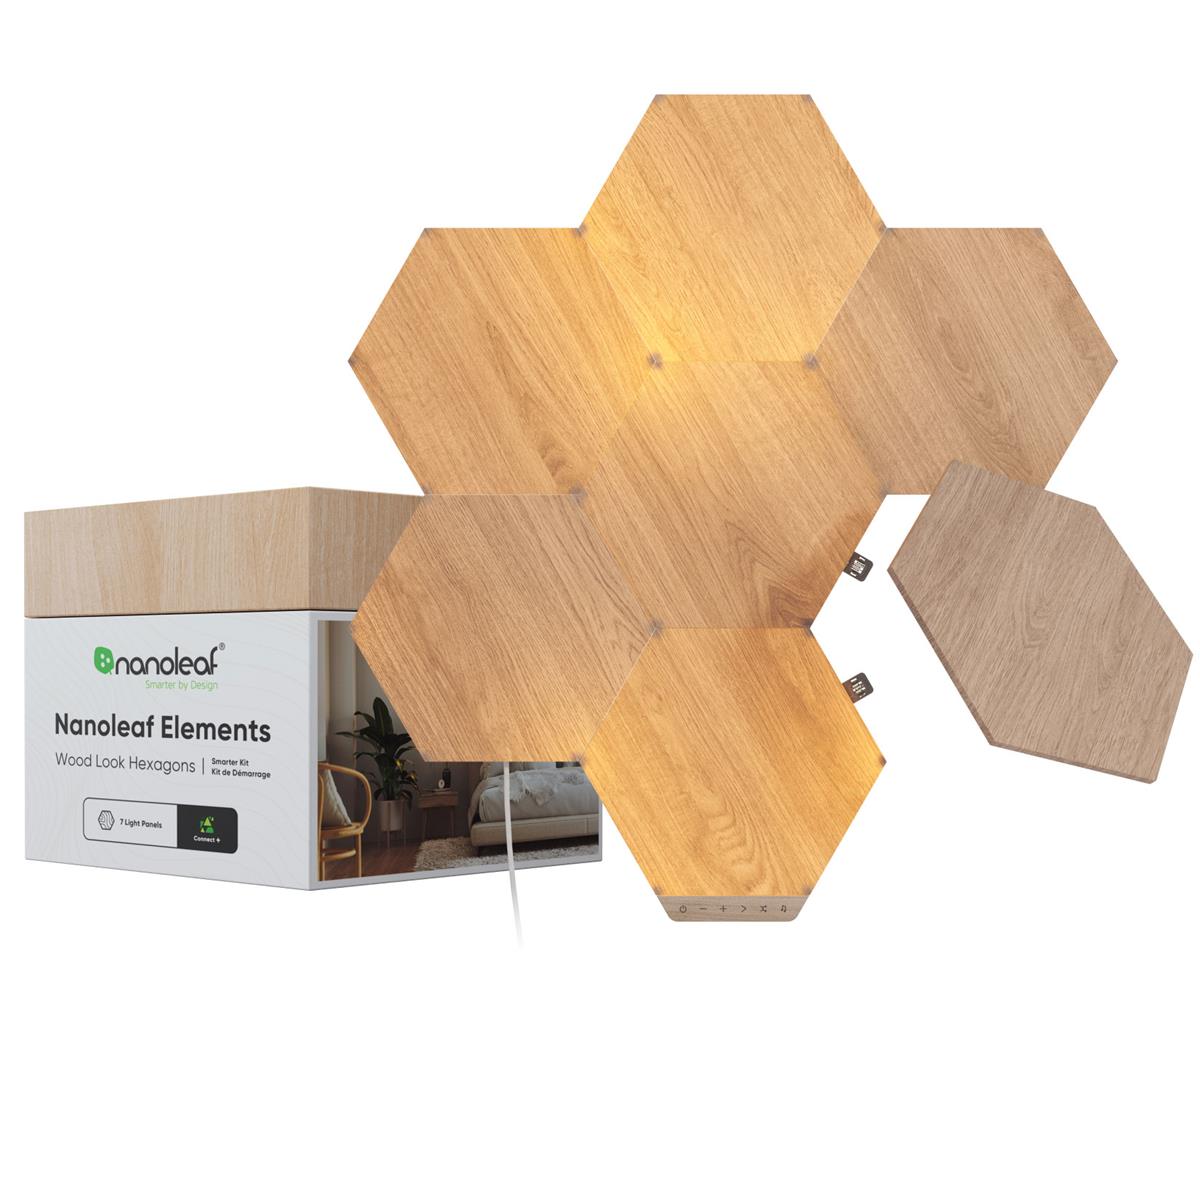 Image of Nanoleaf Elements Wood Look Hexagons Smarter Kit with 7x Light Panels